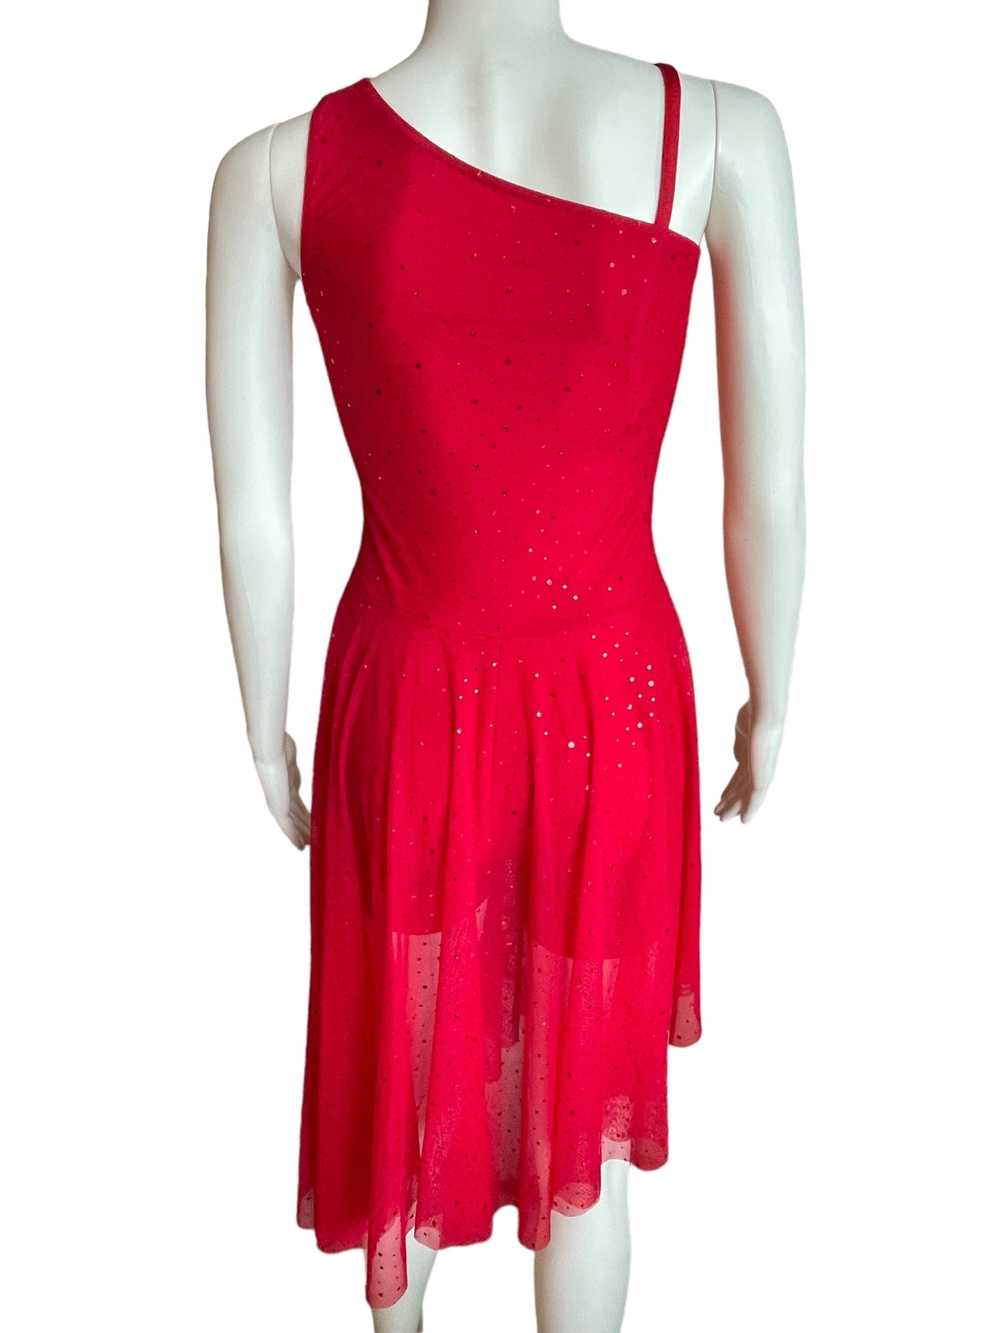 Dance costume - ASYMMETRICAL RED SPARKLE DRESS - image 2